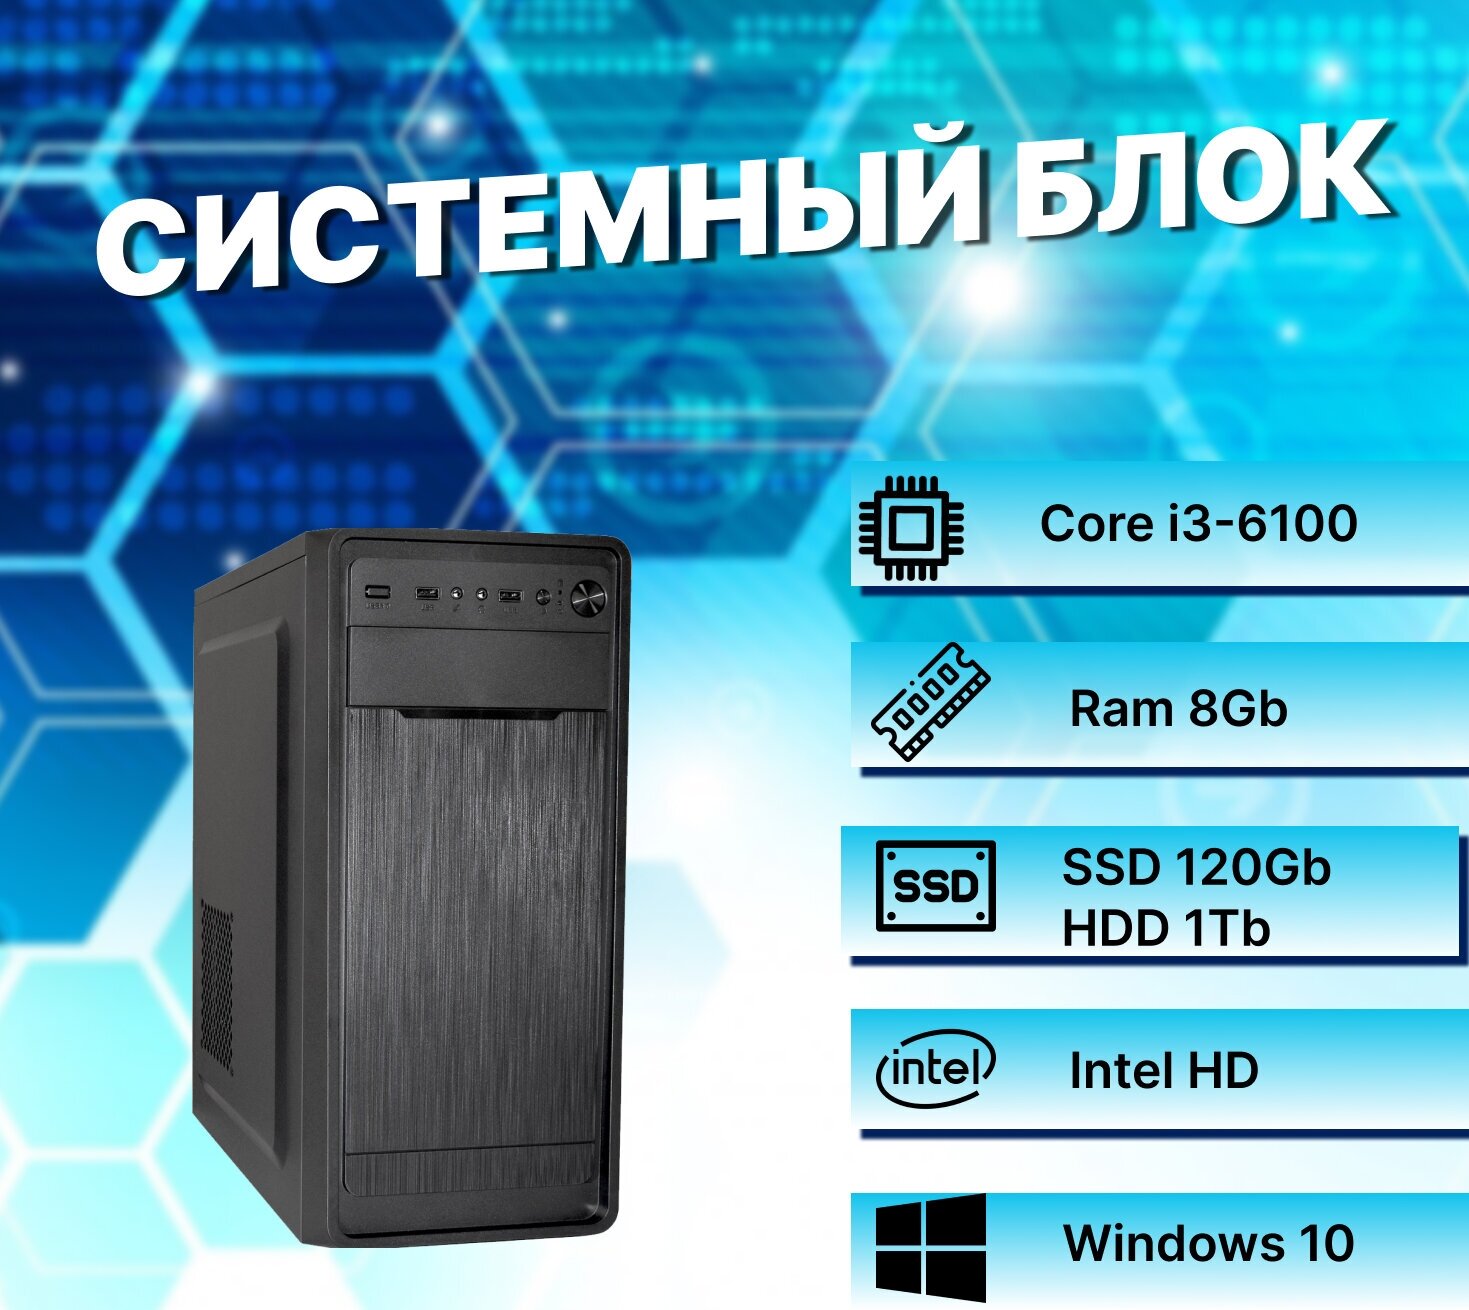 Системный блок Intel Core I3-6100 (3.7ГГц)/ RAM 8Gb/ SSD 120Gb/ HDD 1Tb/ Intel HD/ Windows 10 Pro